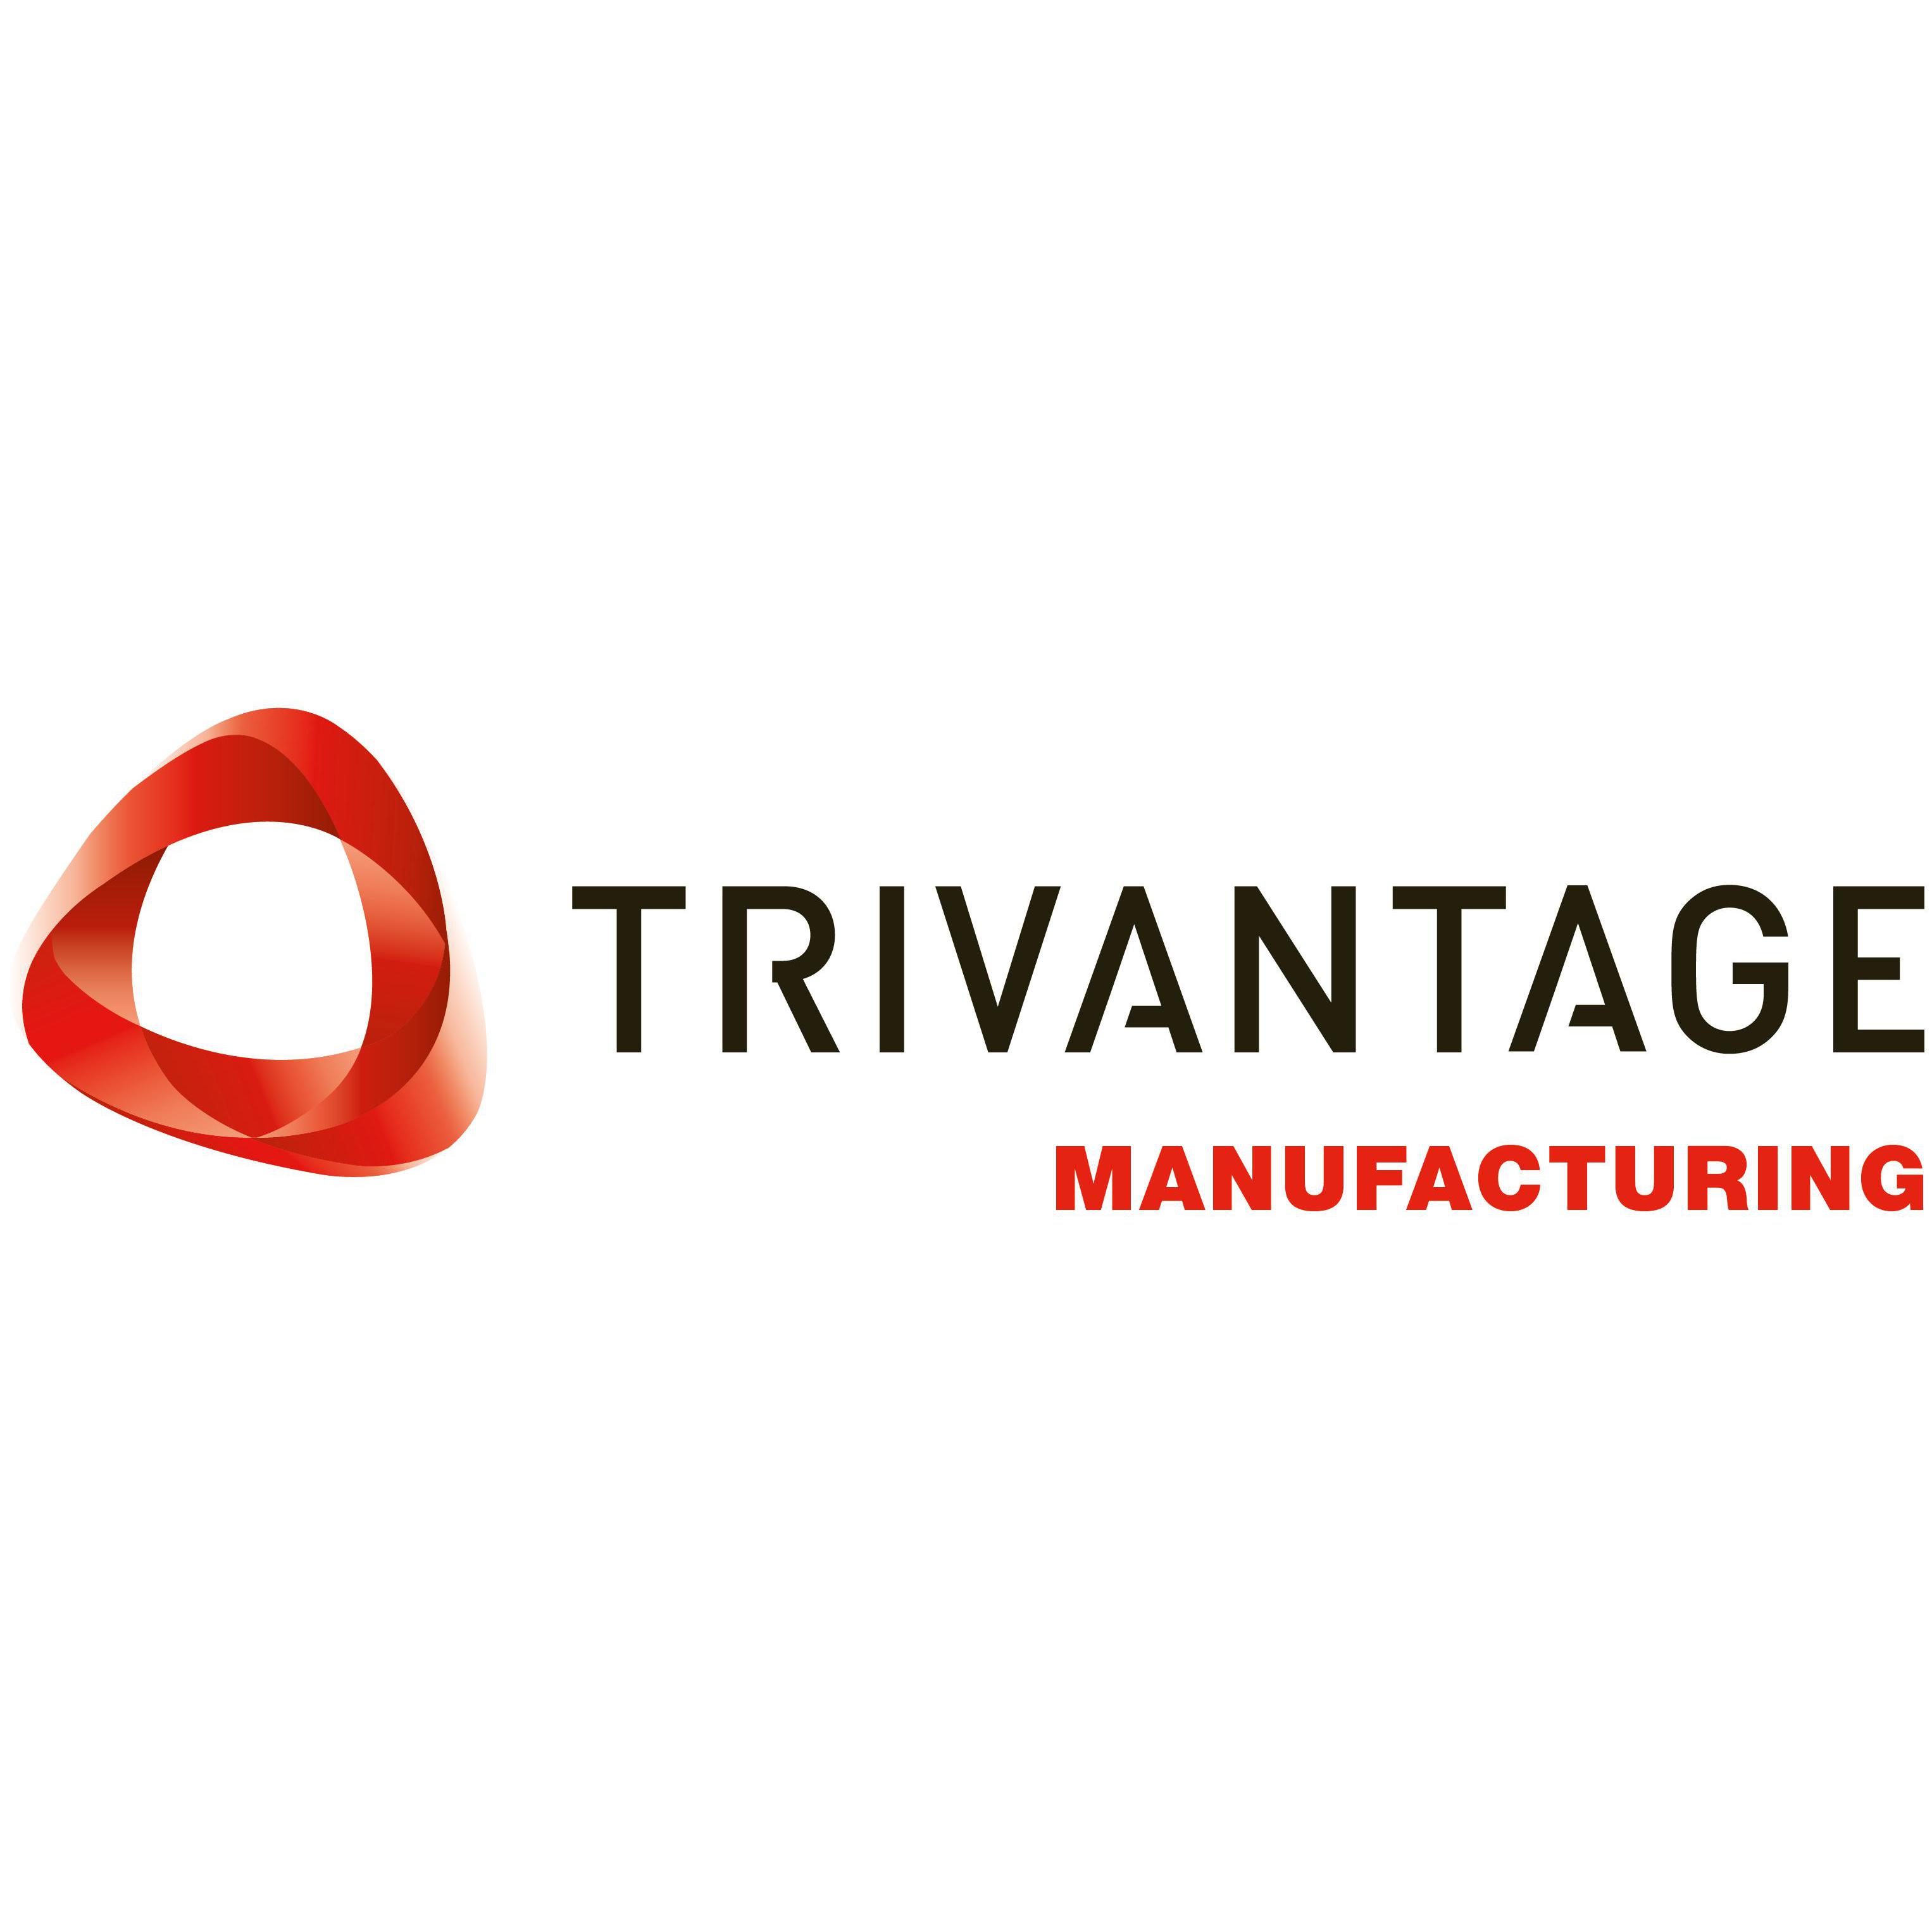 Trivantage Manufacturing - Arndell Park, NSW 2148 - (02) 9672 0400 | ShowMeLocal.com